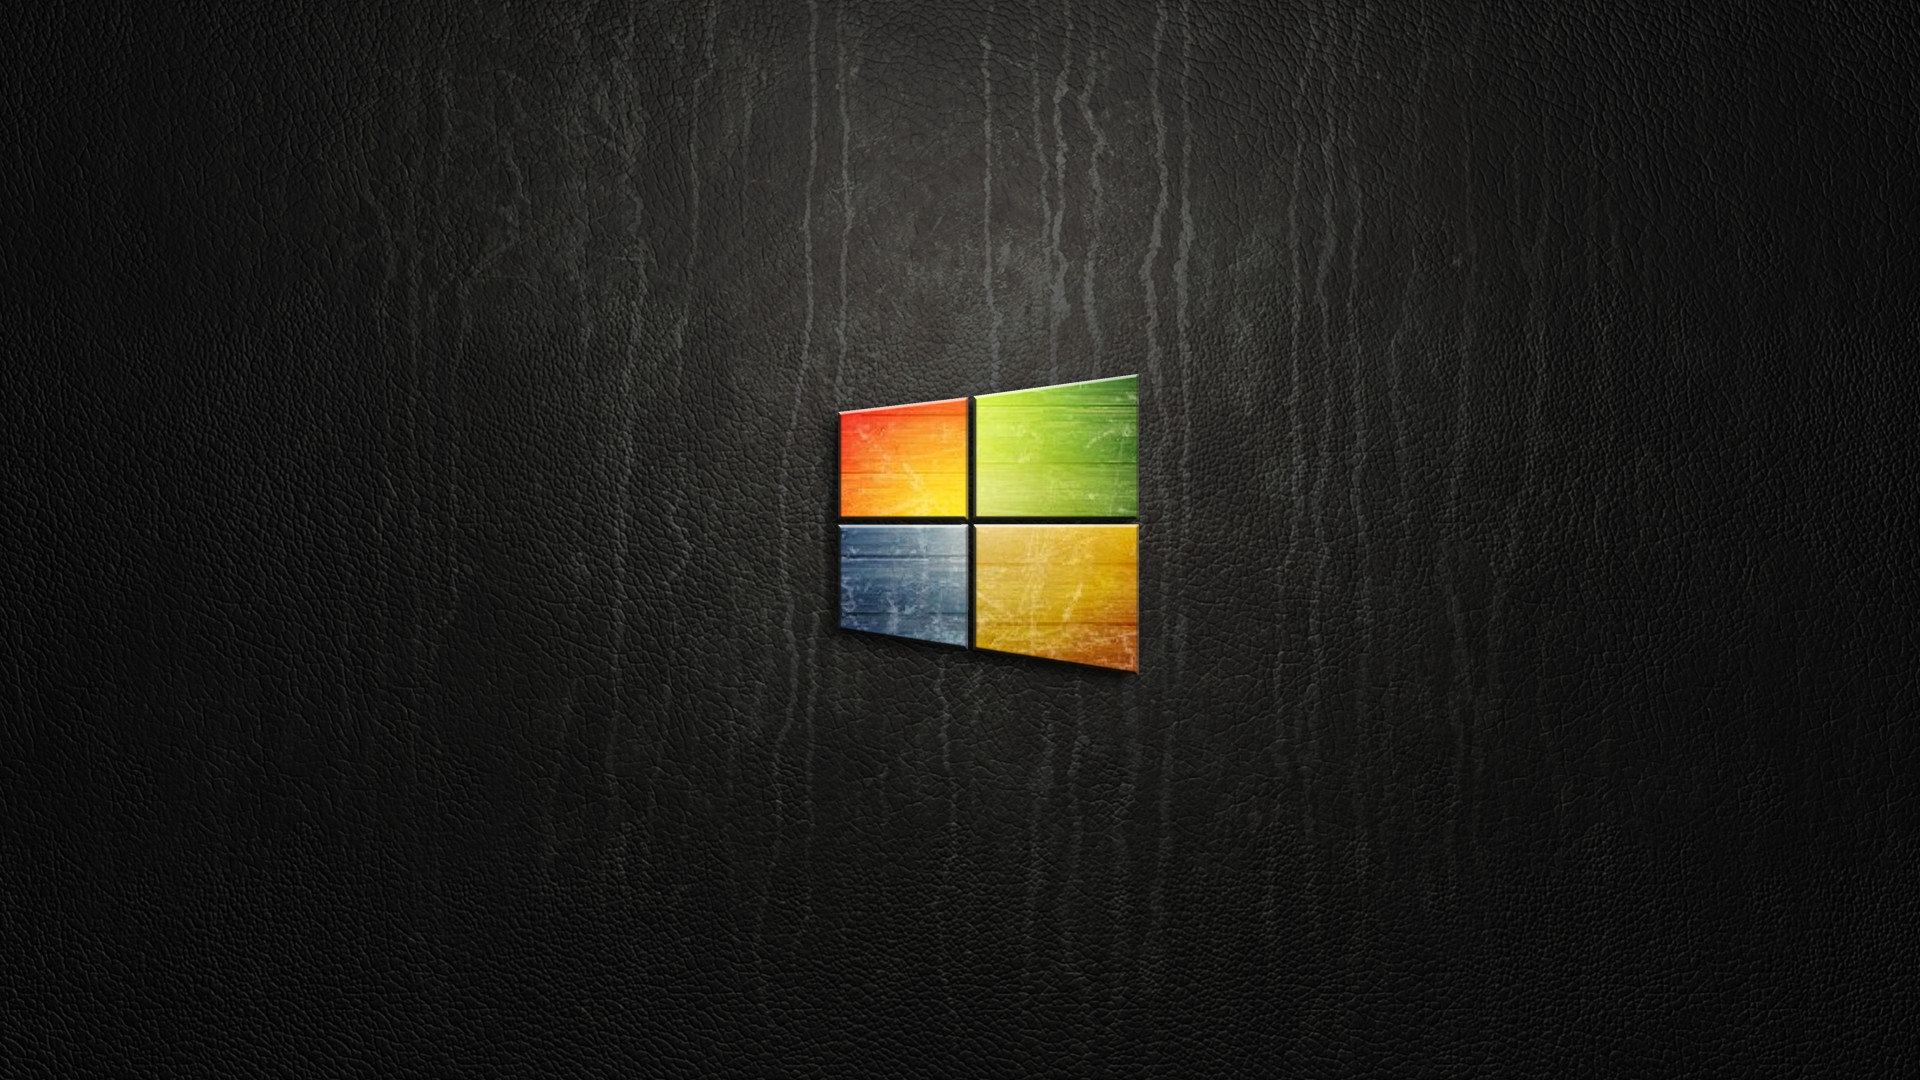 High resolution Windows hd 1920x1080 background ID:60133 for desktop